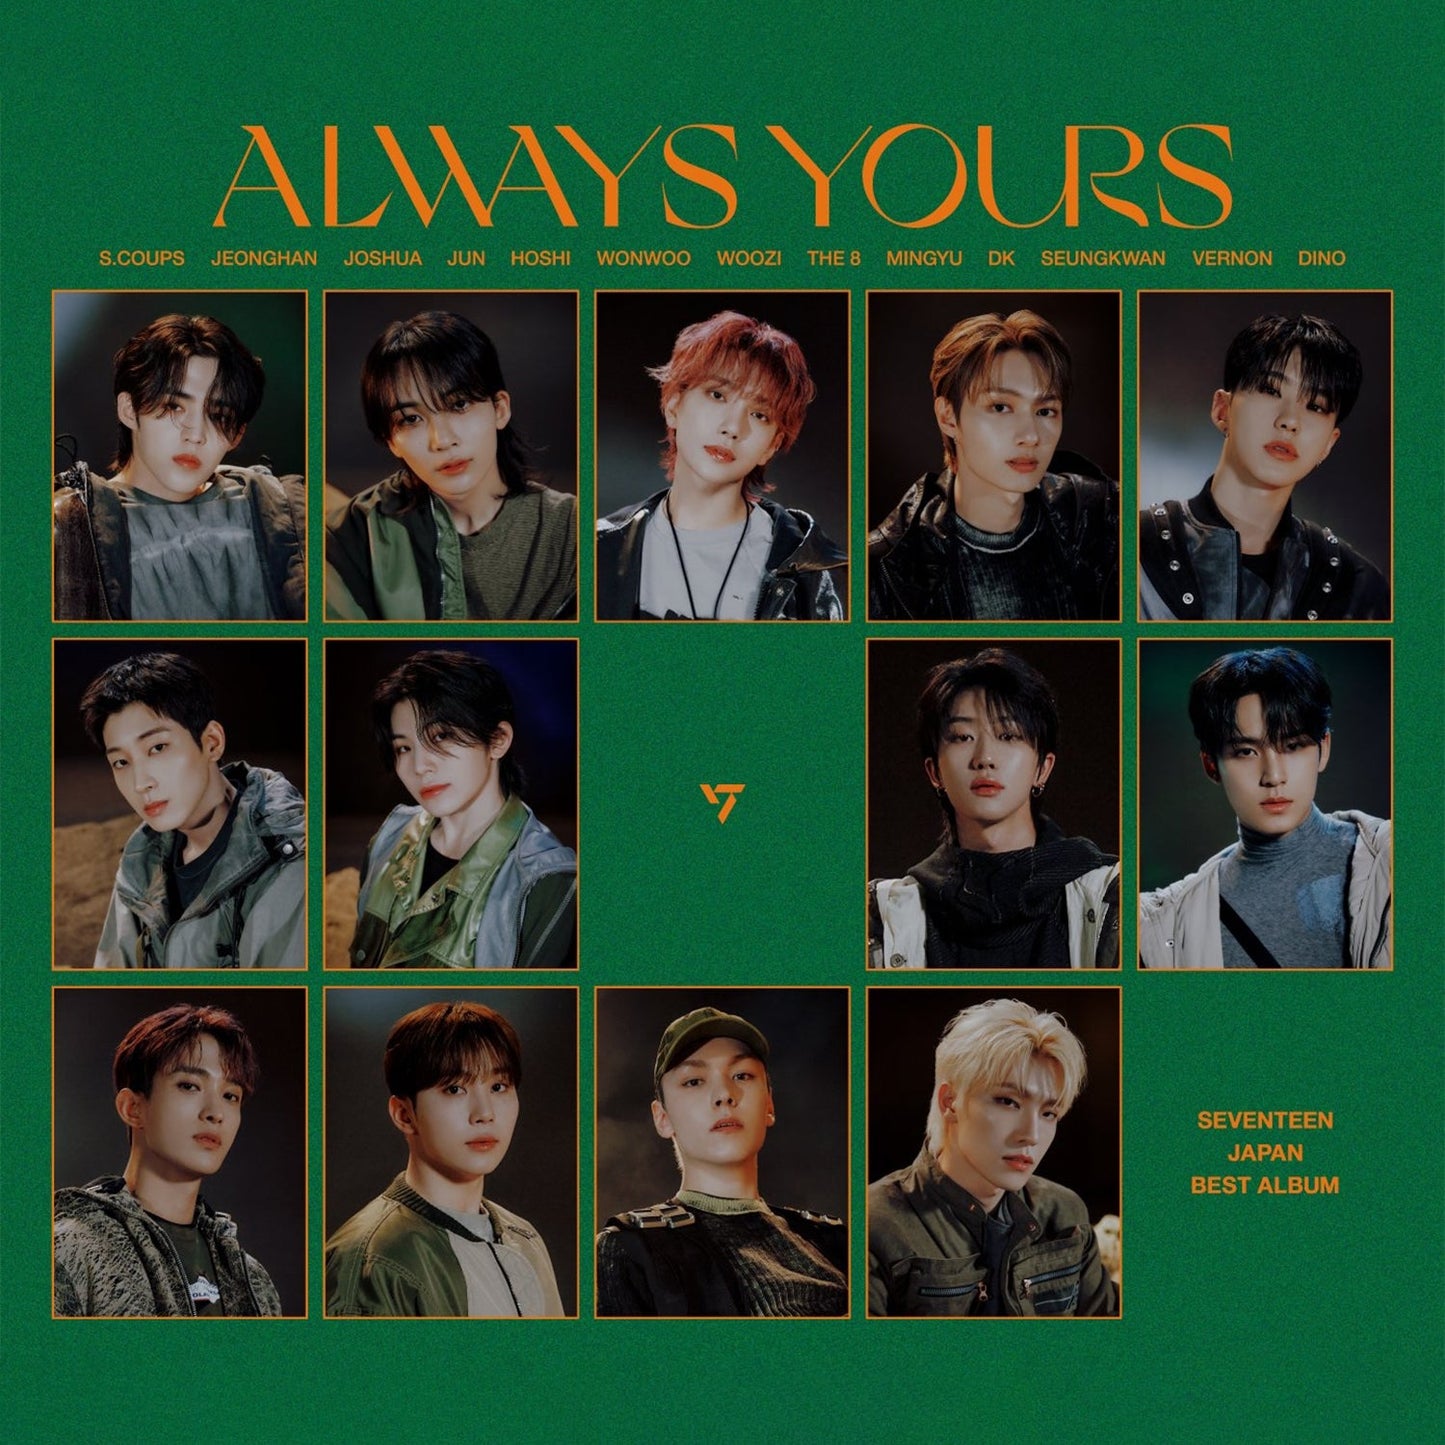 SEVENTEEN JAPAN BEST ALBUM 'ALWAYS YOURS' (LIMITED) D VERSION COVER